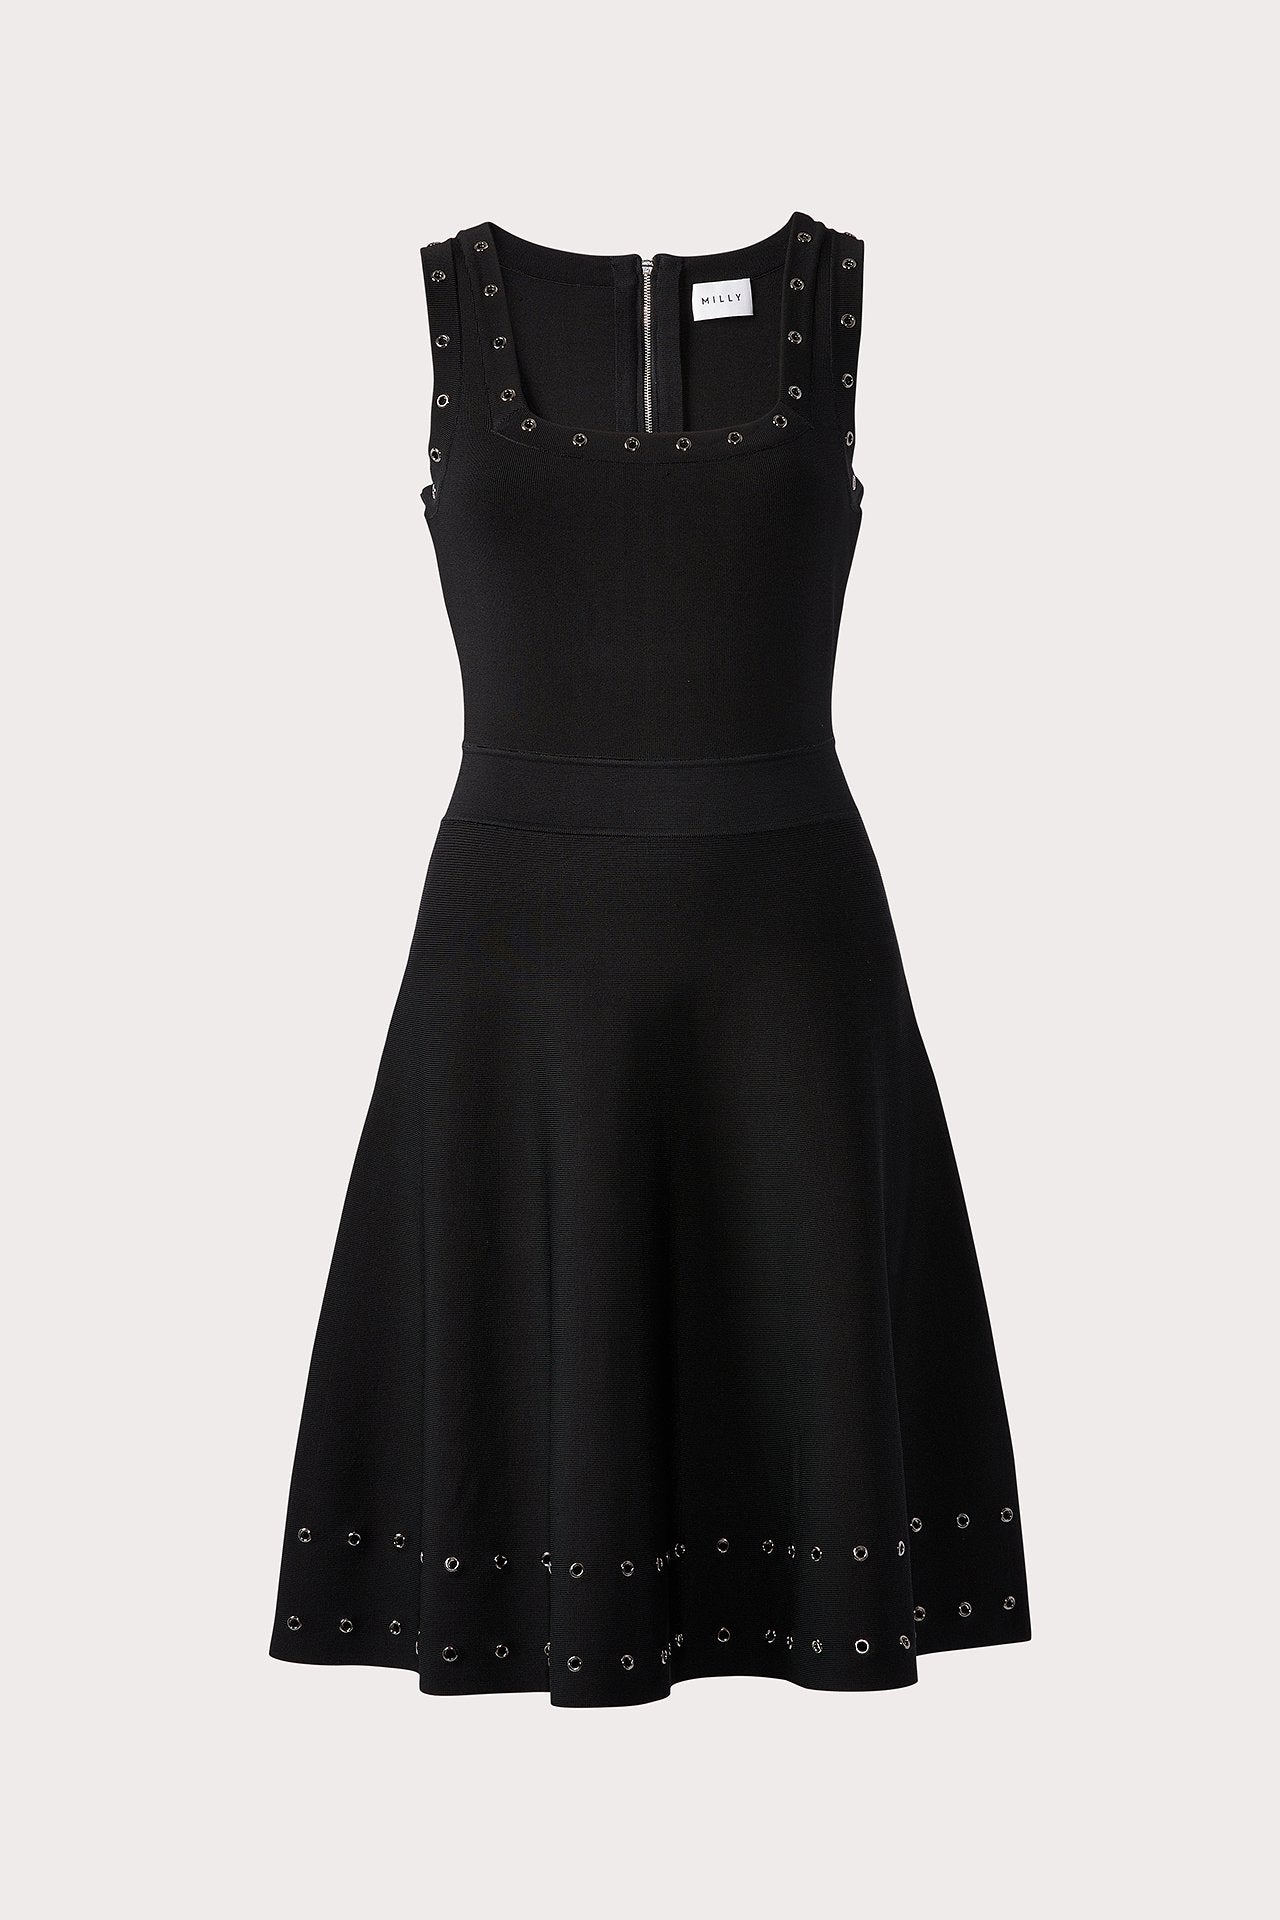 Milly Grommet Tiered Dress In Black